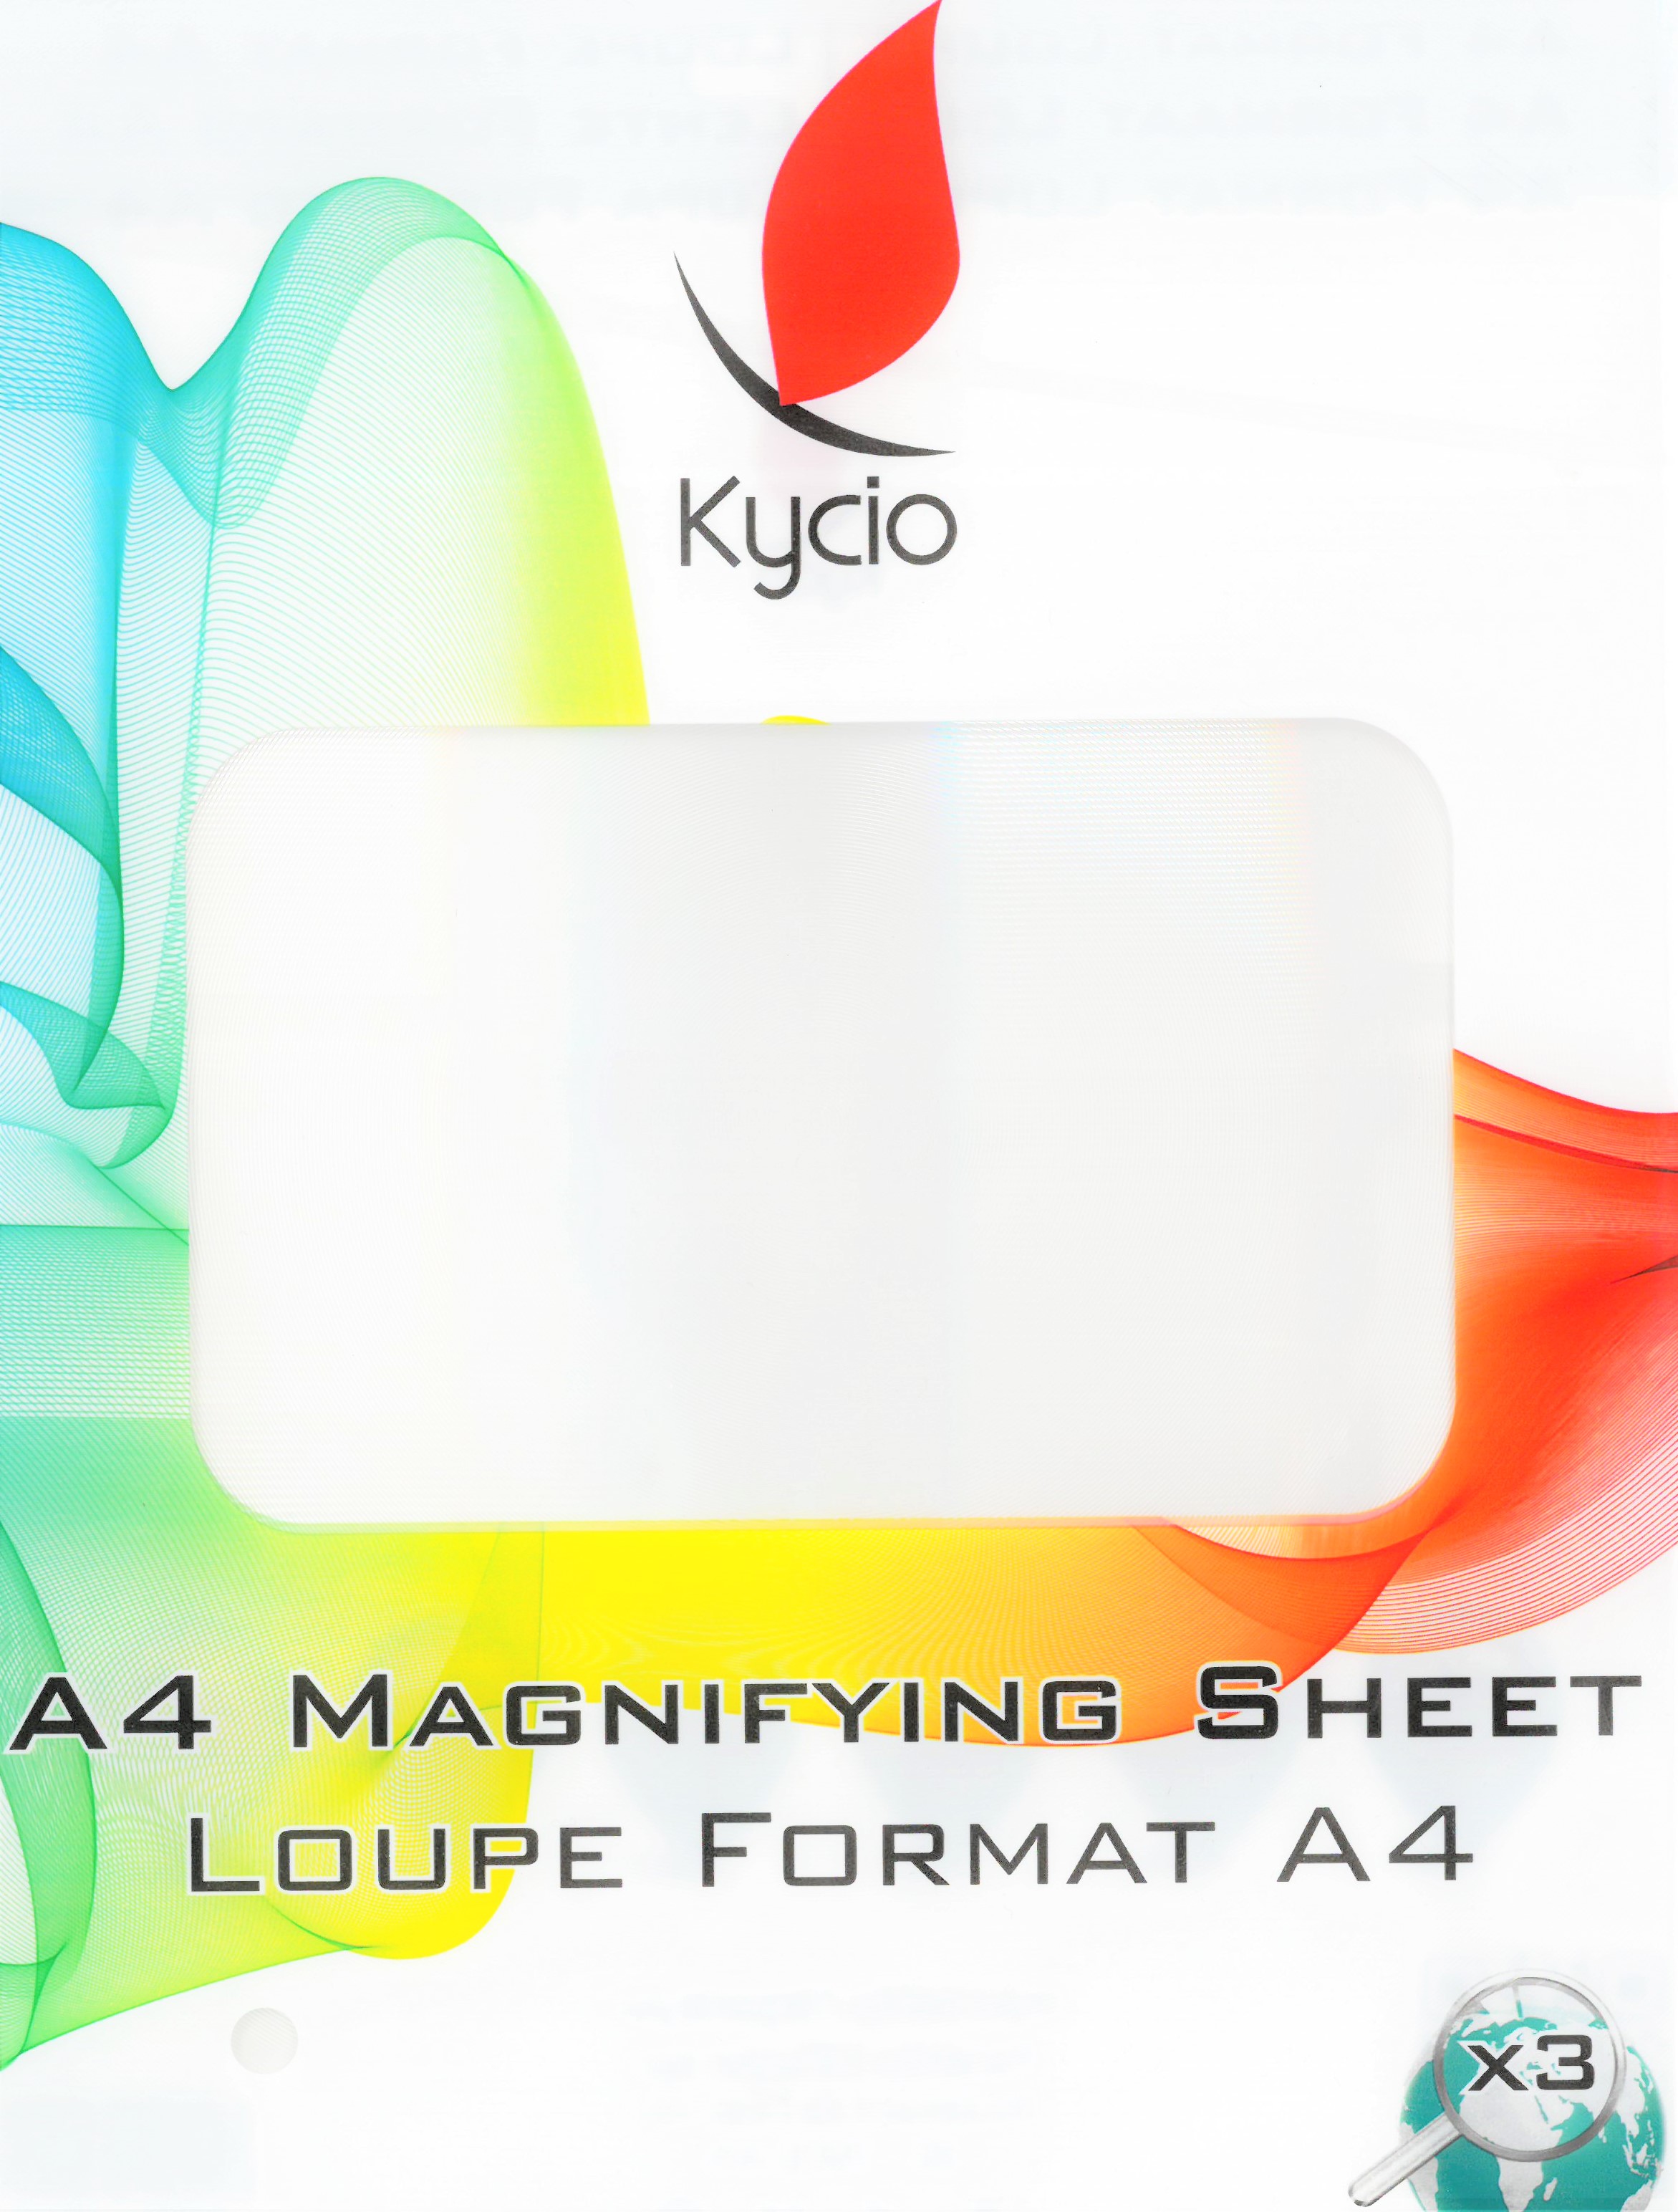 Magnifying sheet A4 x3